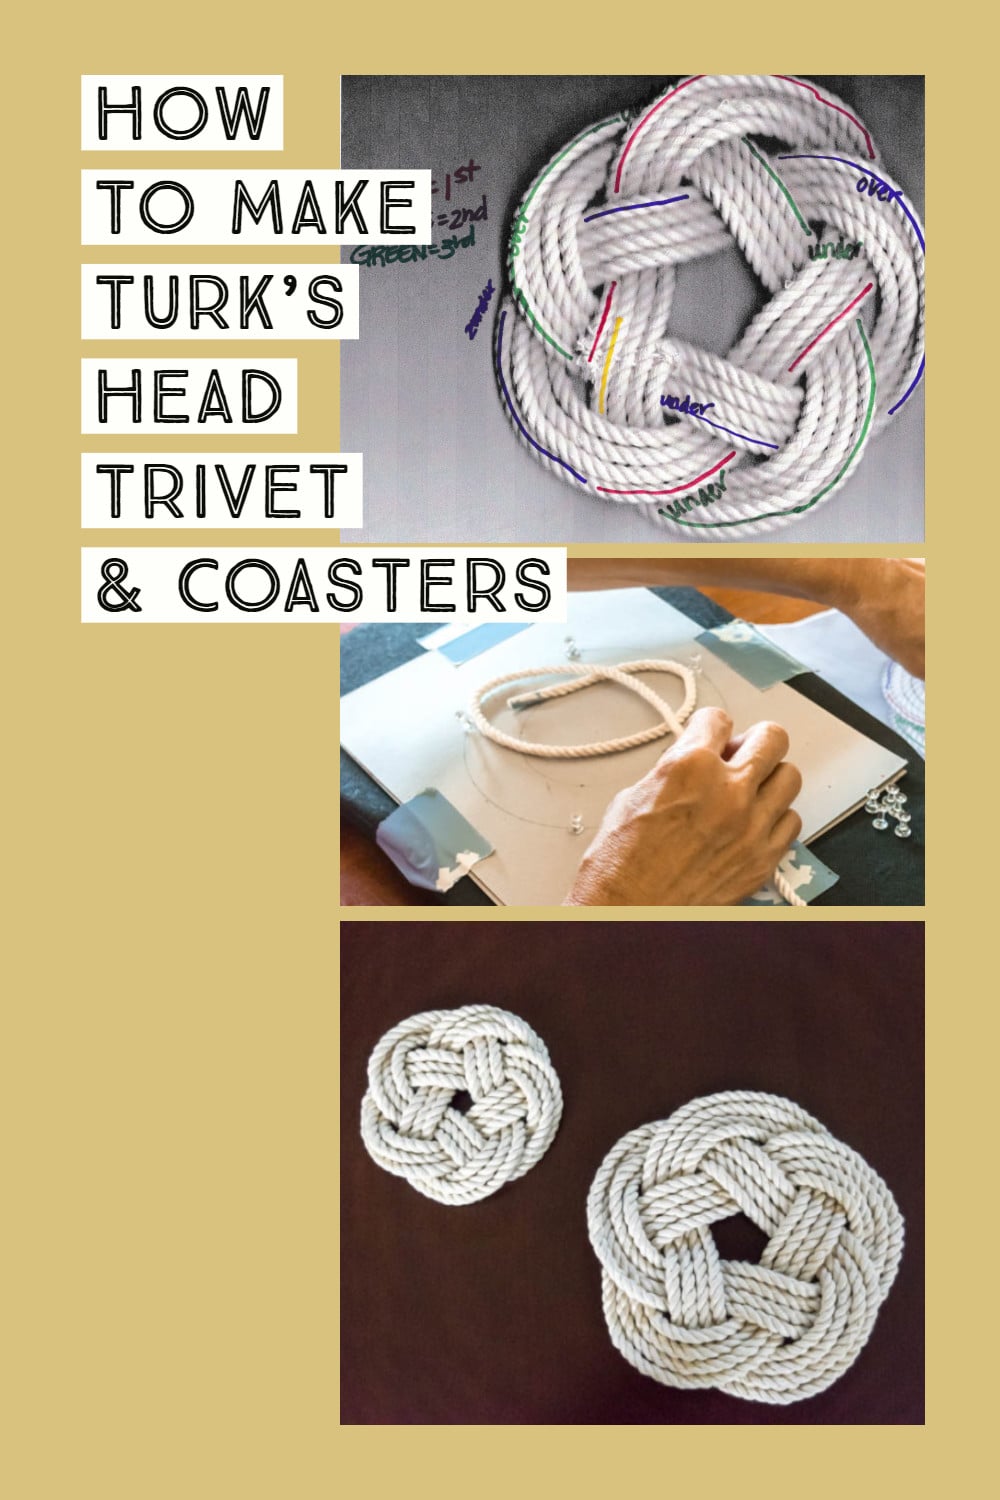 STEPS TO MAKE TURK'S HEAD TRIVET AND COASTERS